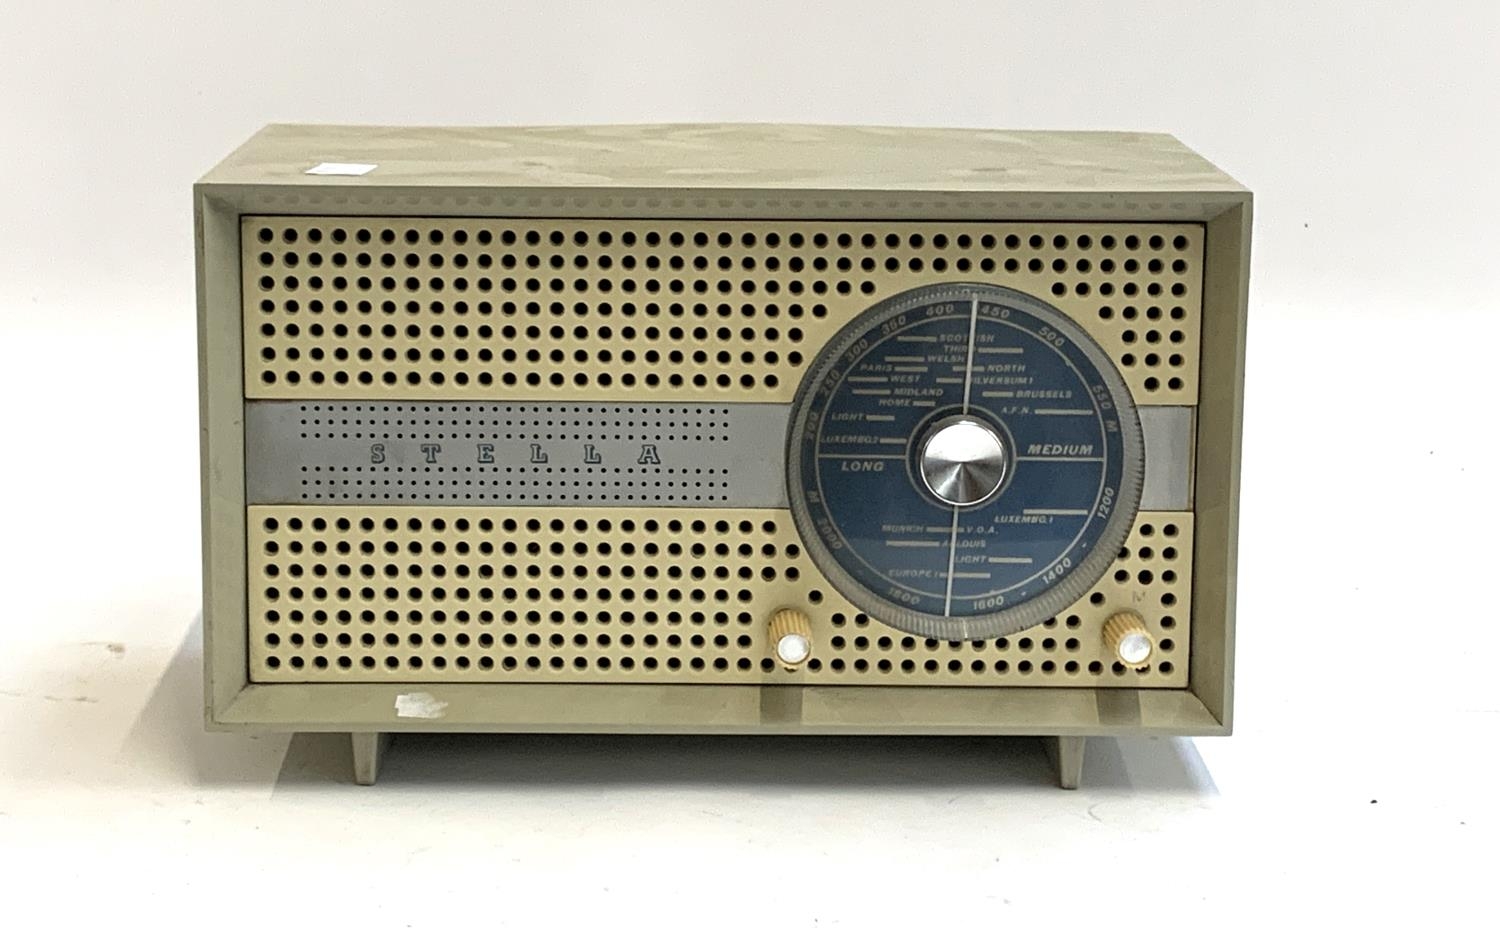 A Stella vintage radio, Mk.36701